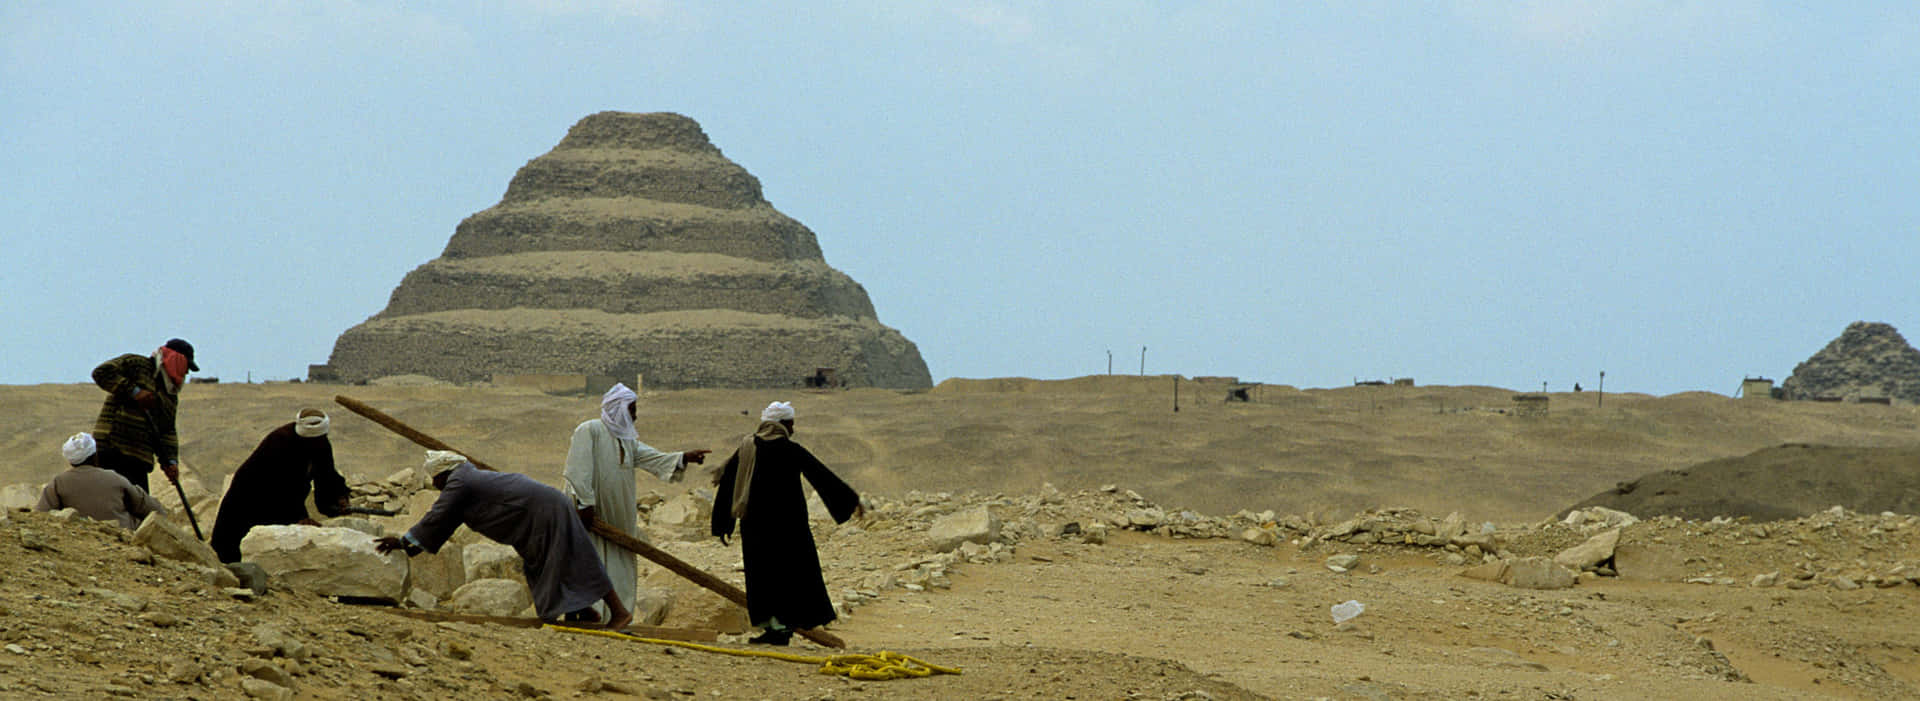 People In Saqqara Pyramid Wallpaper